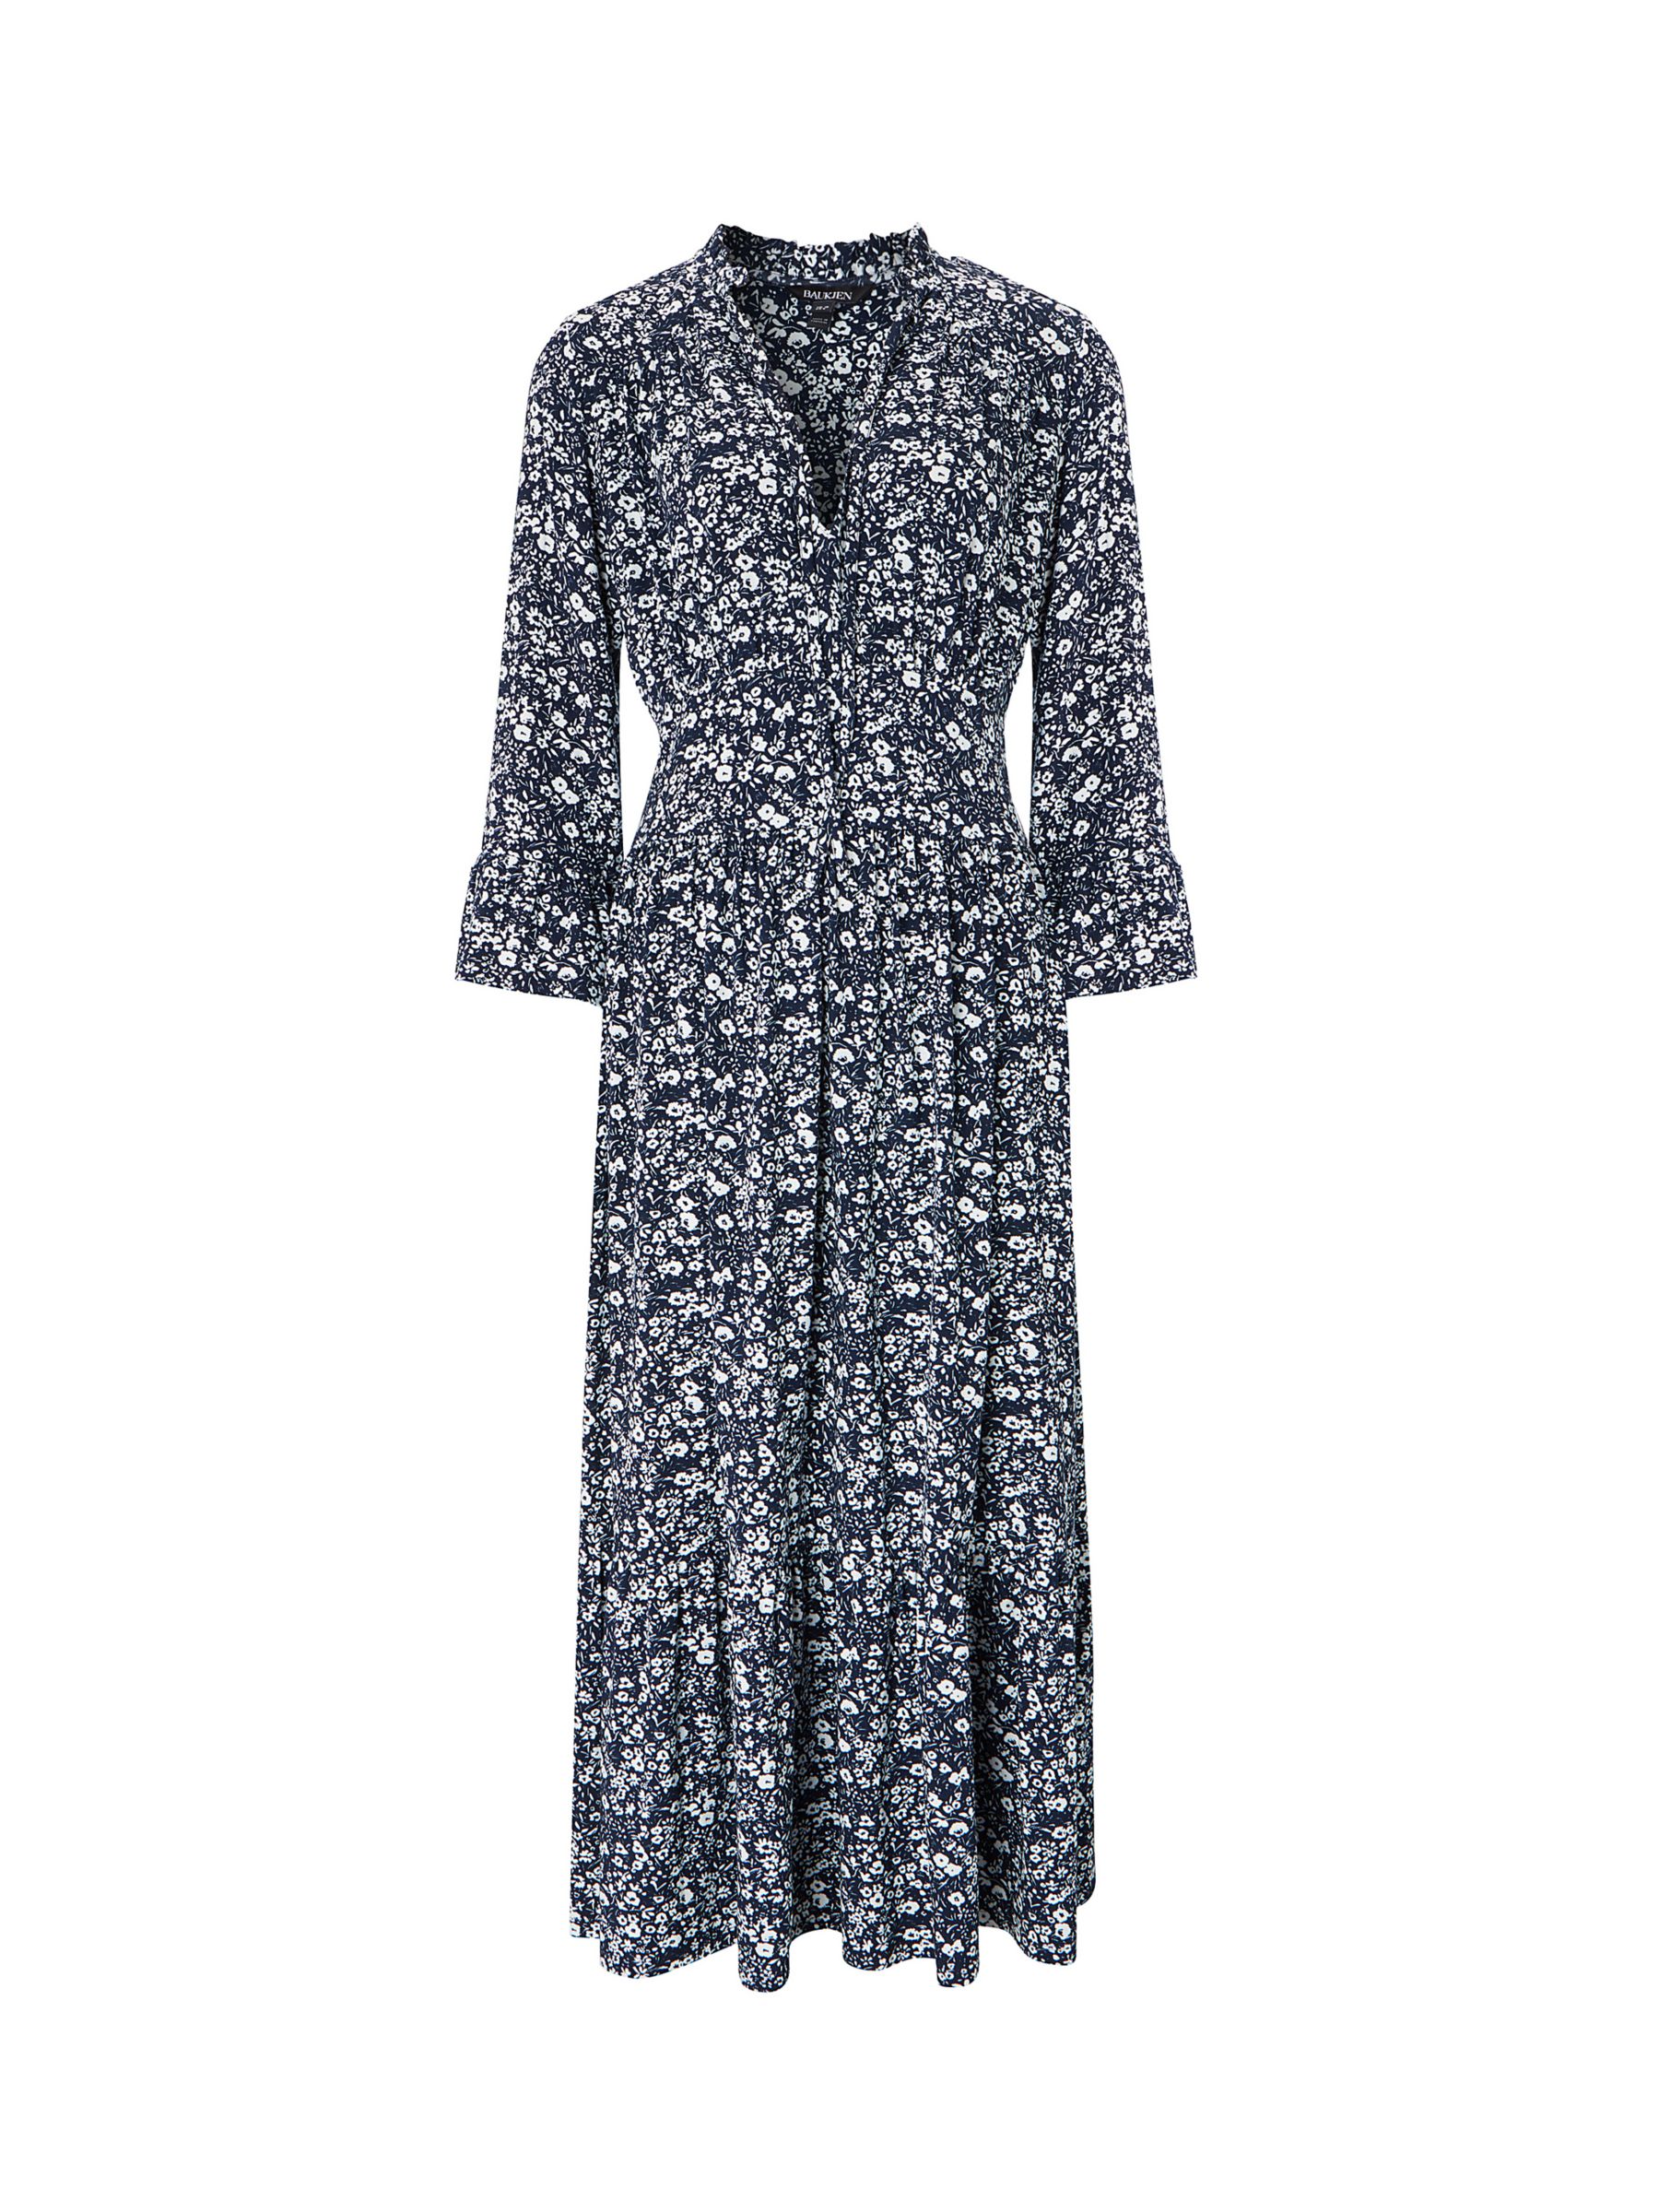 Baukjen Marta Floral Midi Dress, Indigo Silhouette at John Lewis & Partners